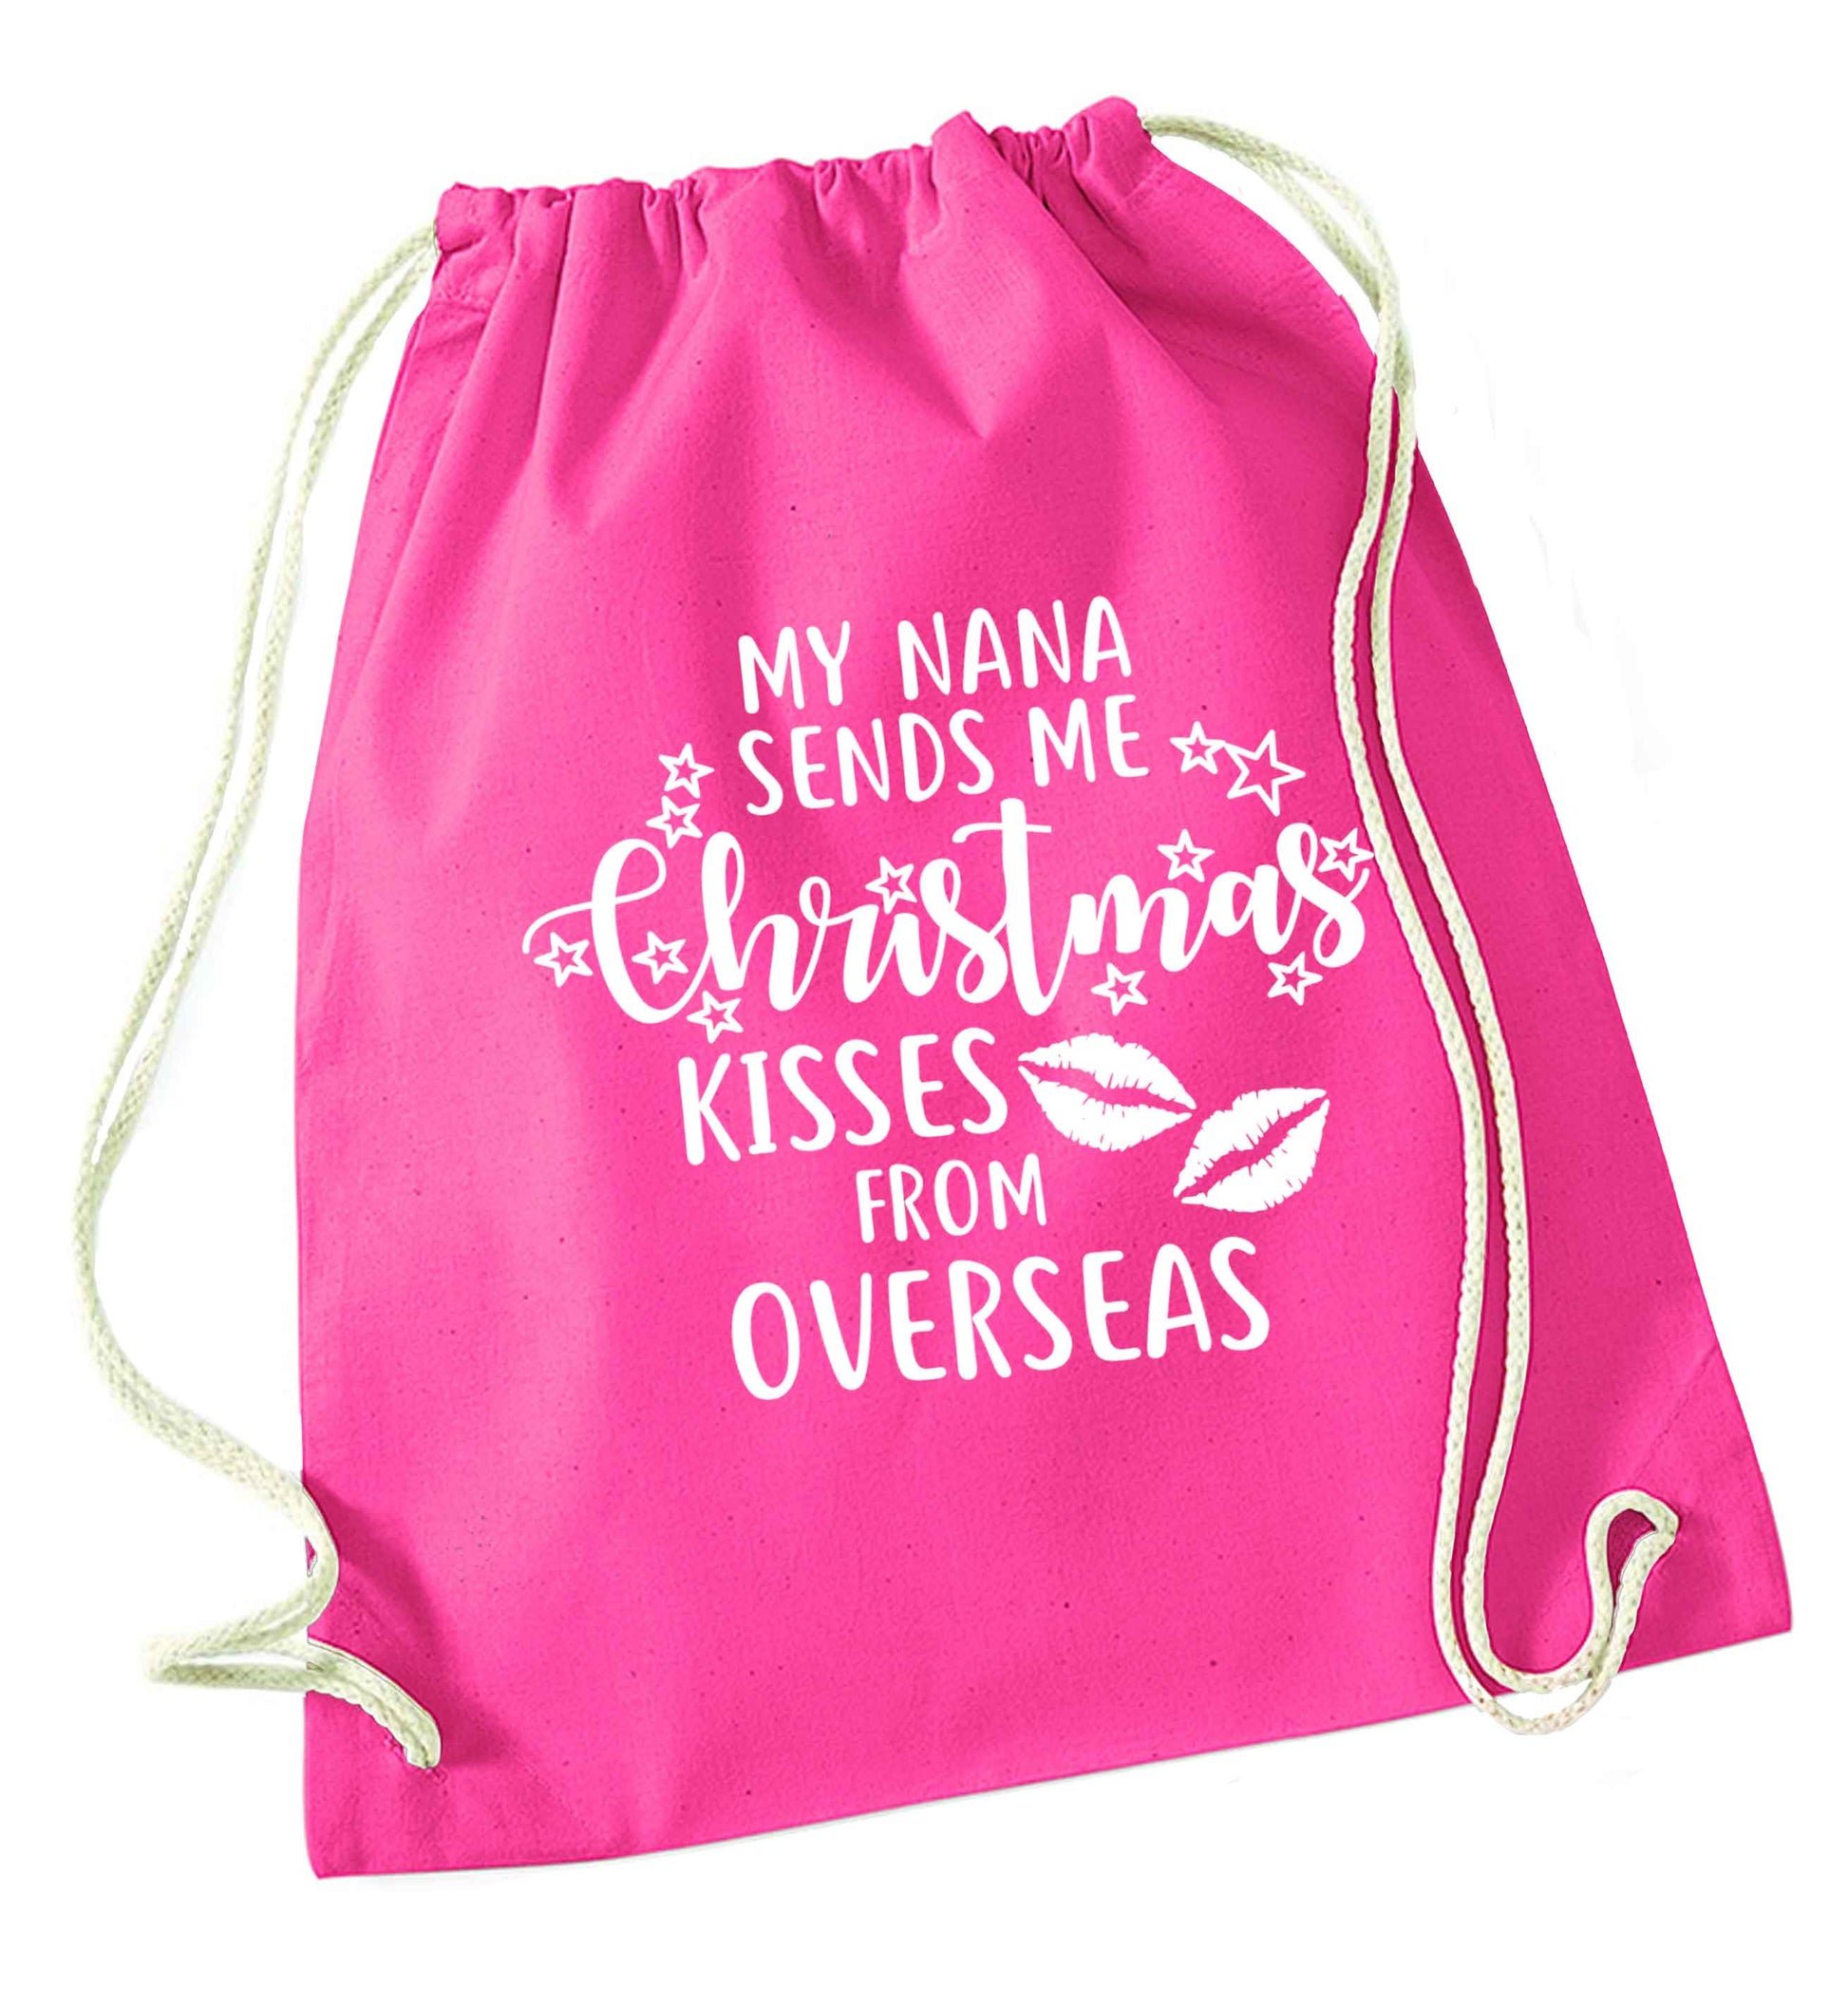 Grandma Christmas Kisses Overseas pink drawstring bag